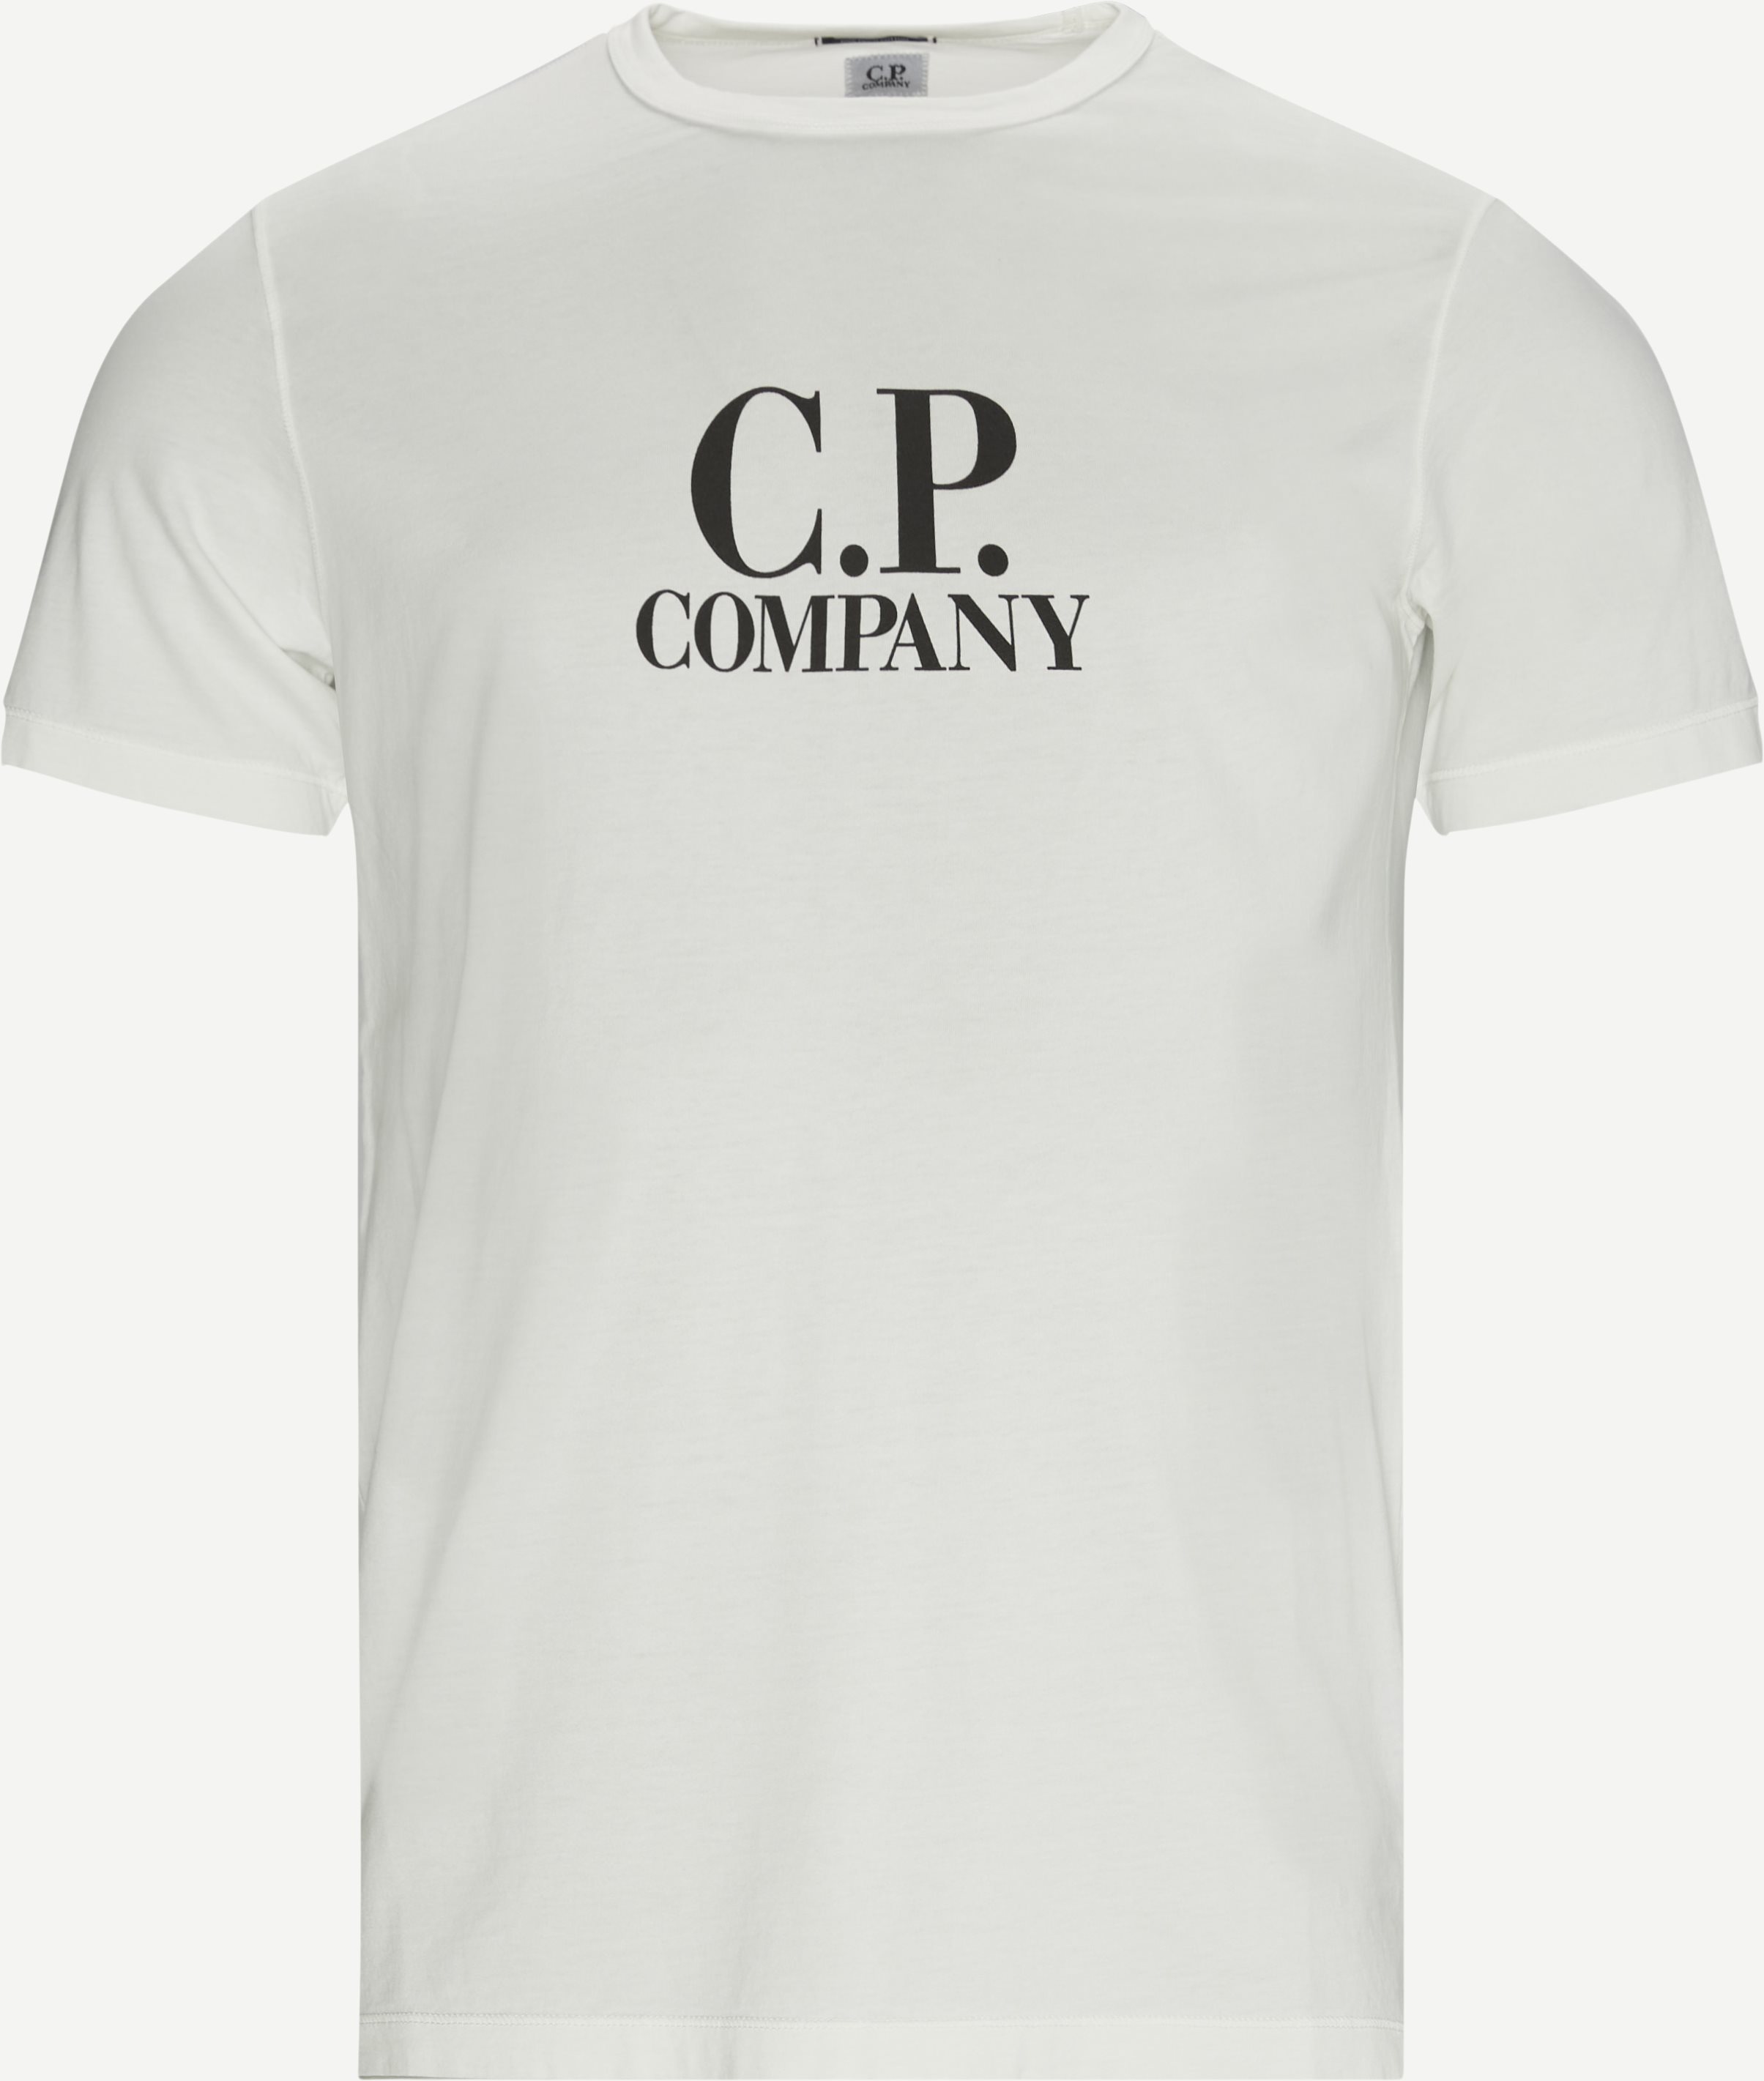 Logotröja - T-shirts - Regular fit - Vit